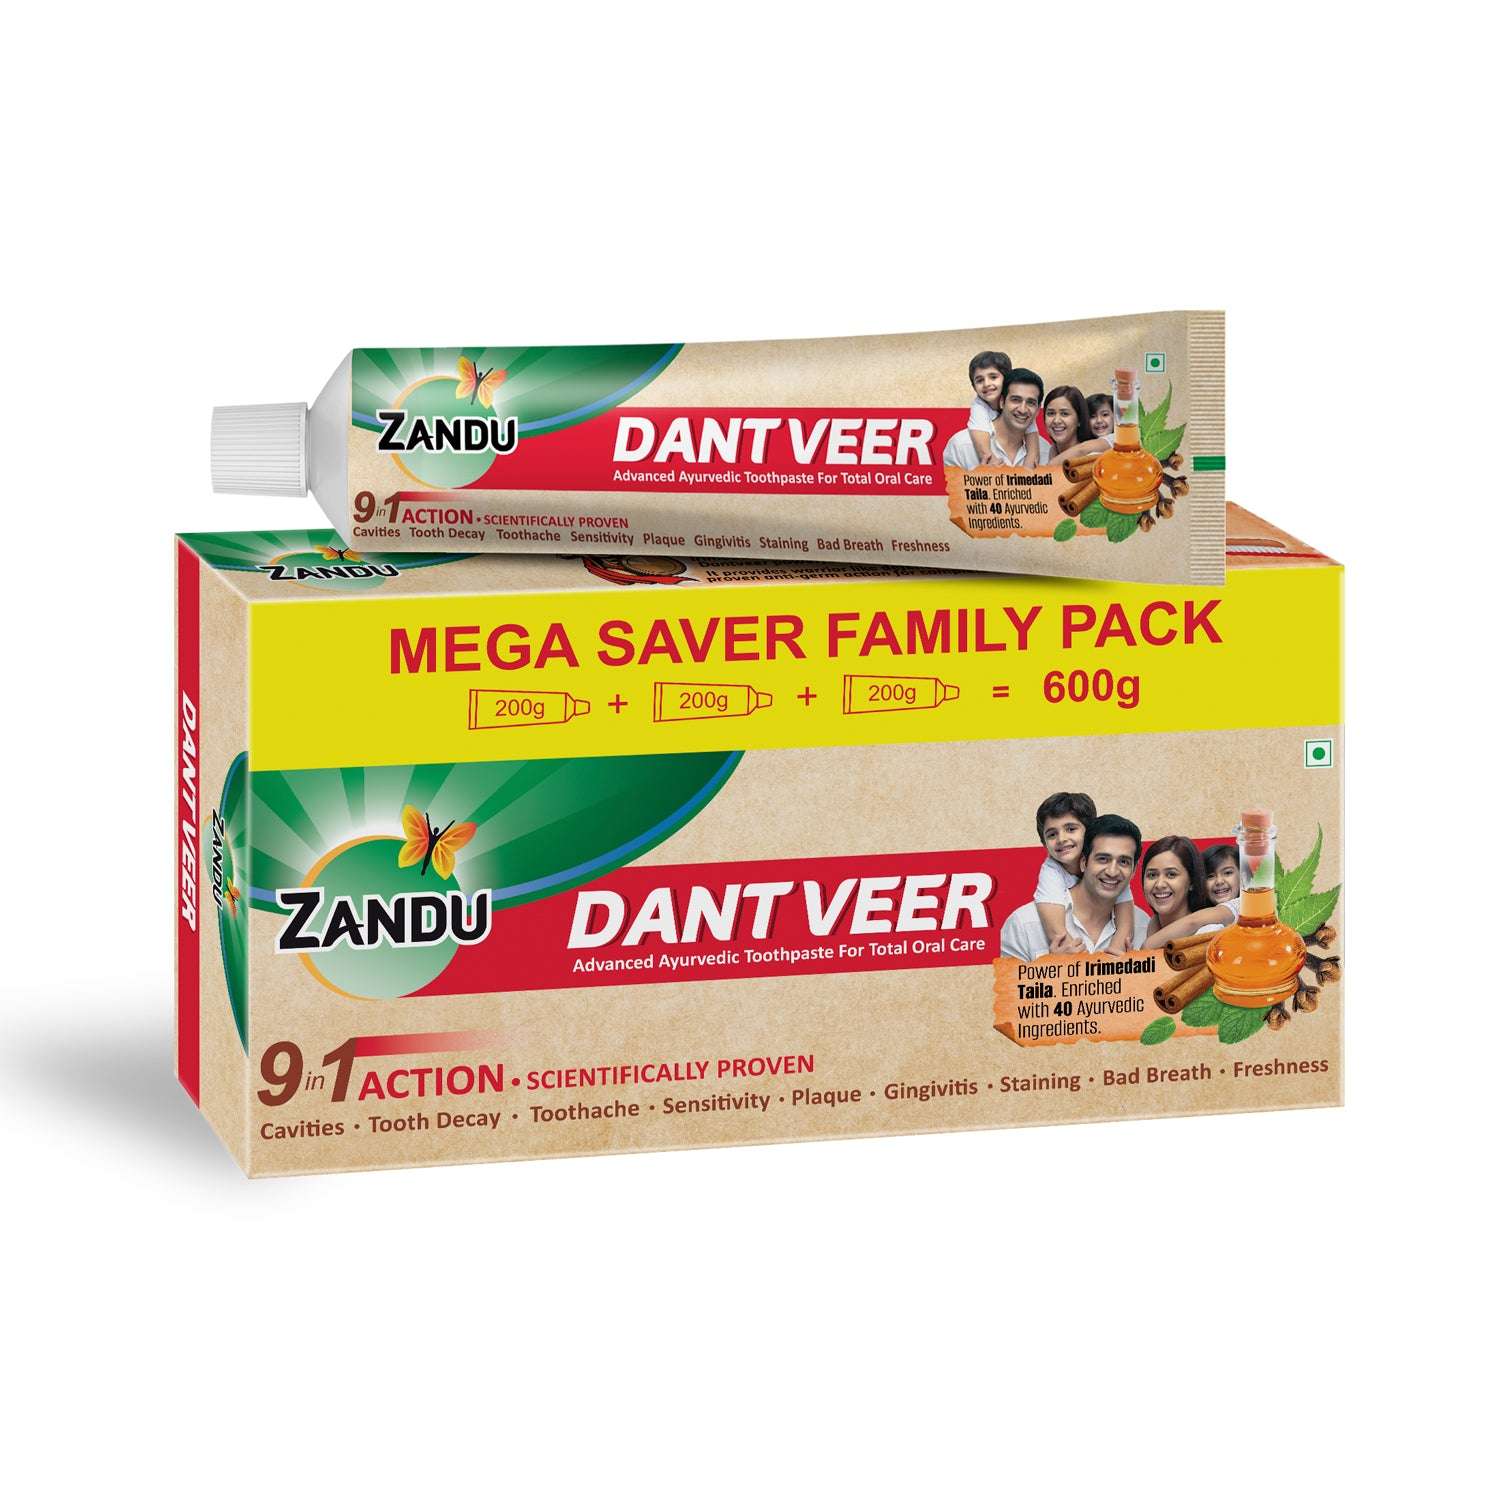 Zandu Dantveer family pack